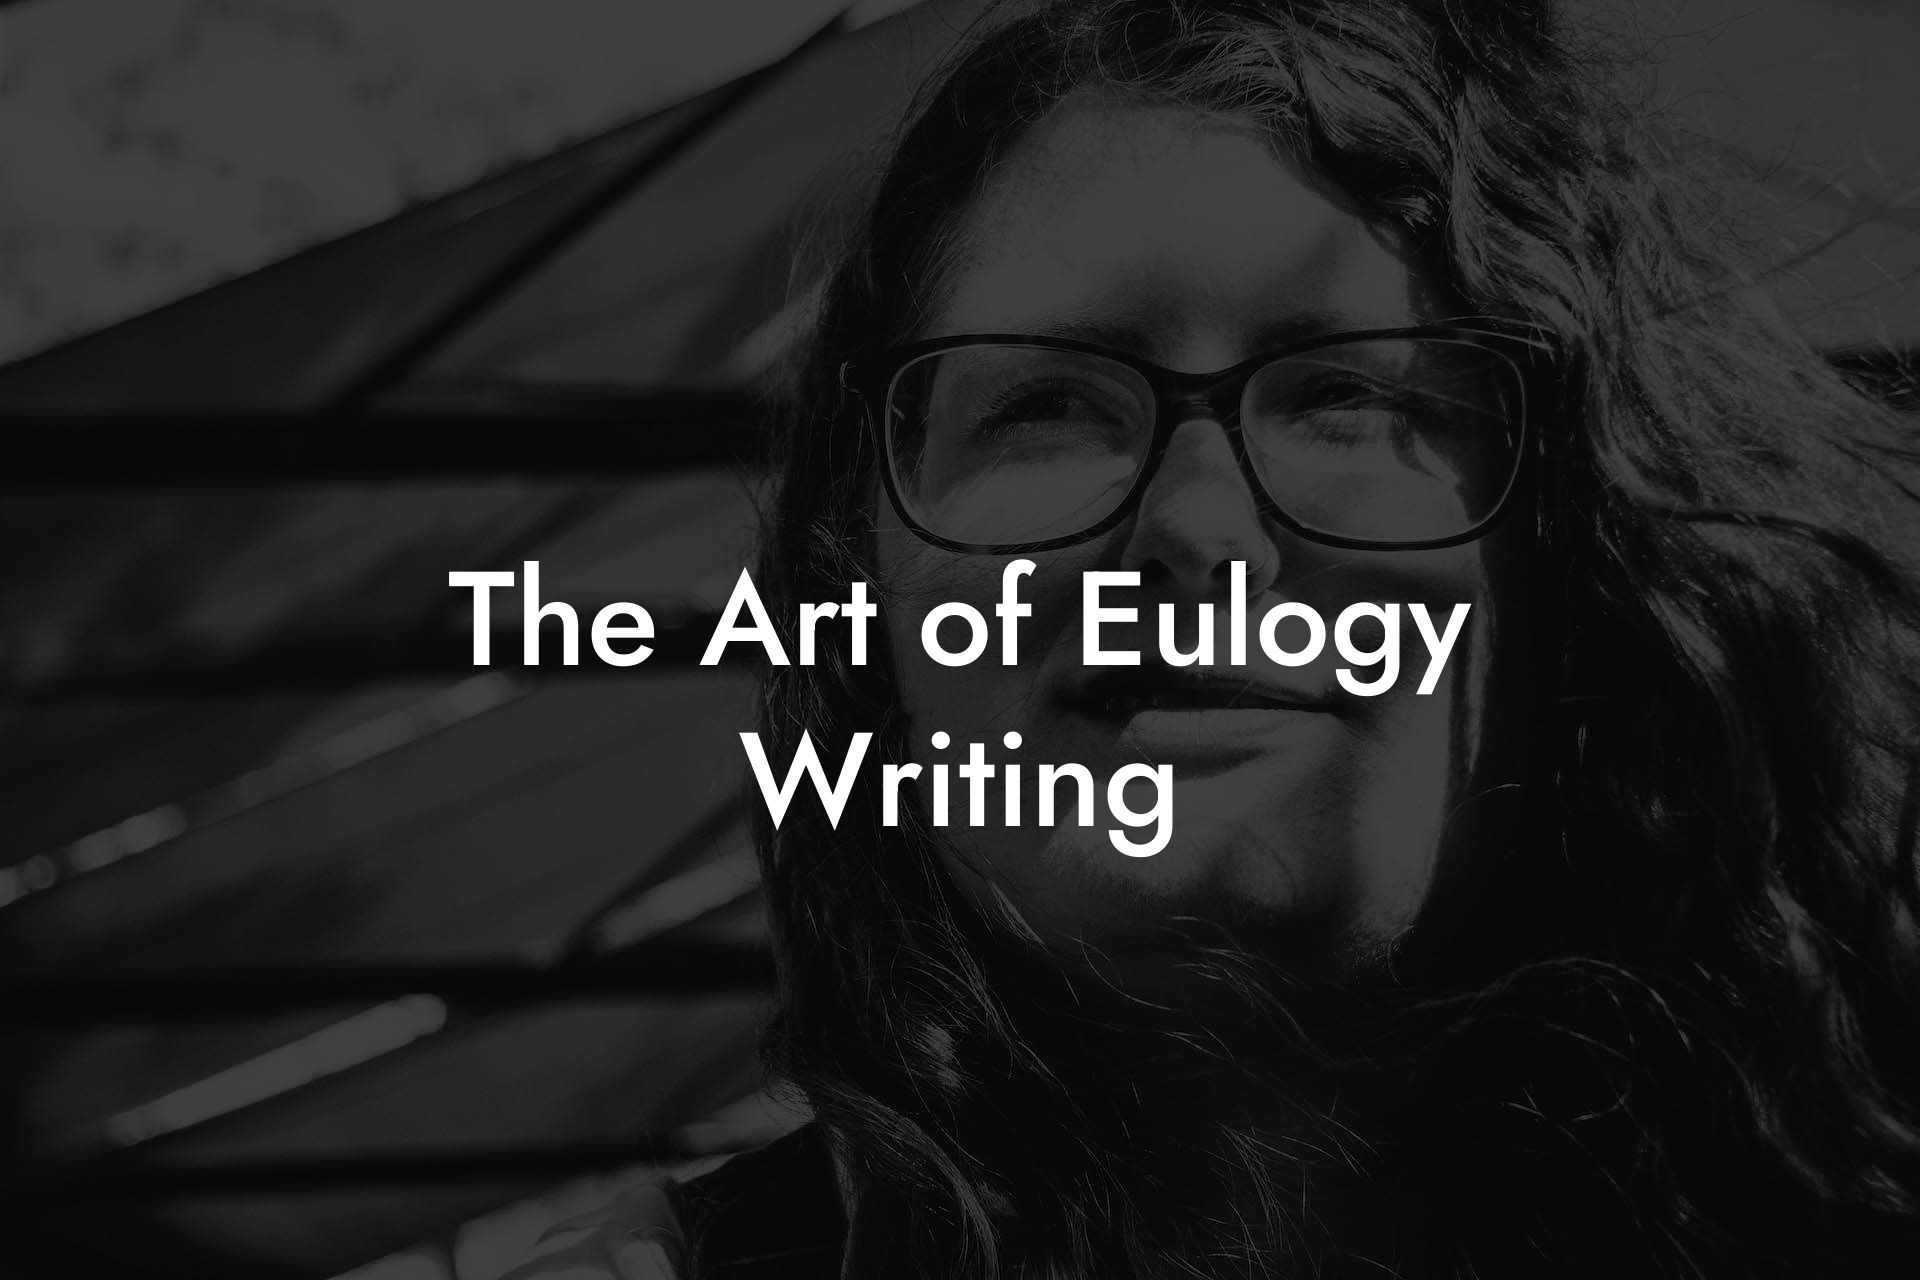 The Art of Eulogy Writing